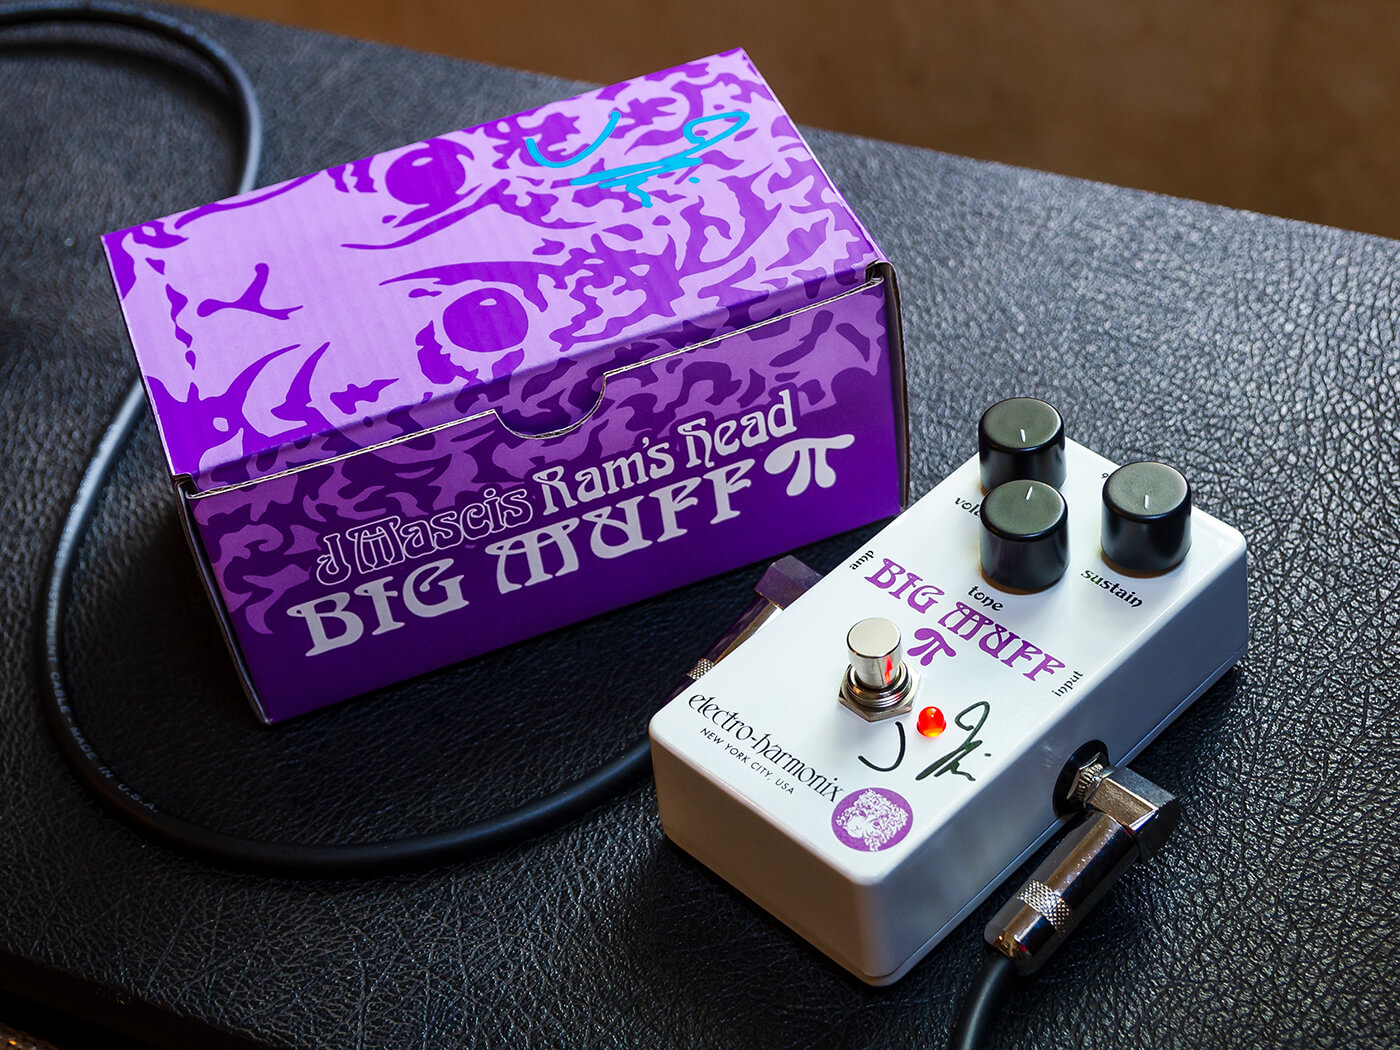 Electro-Harmonix J Mascis Ram的大型Muff Pi